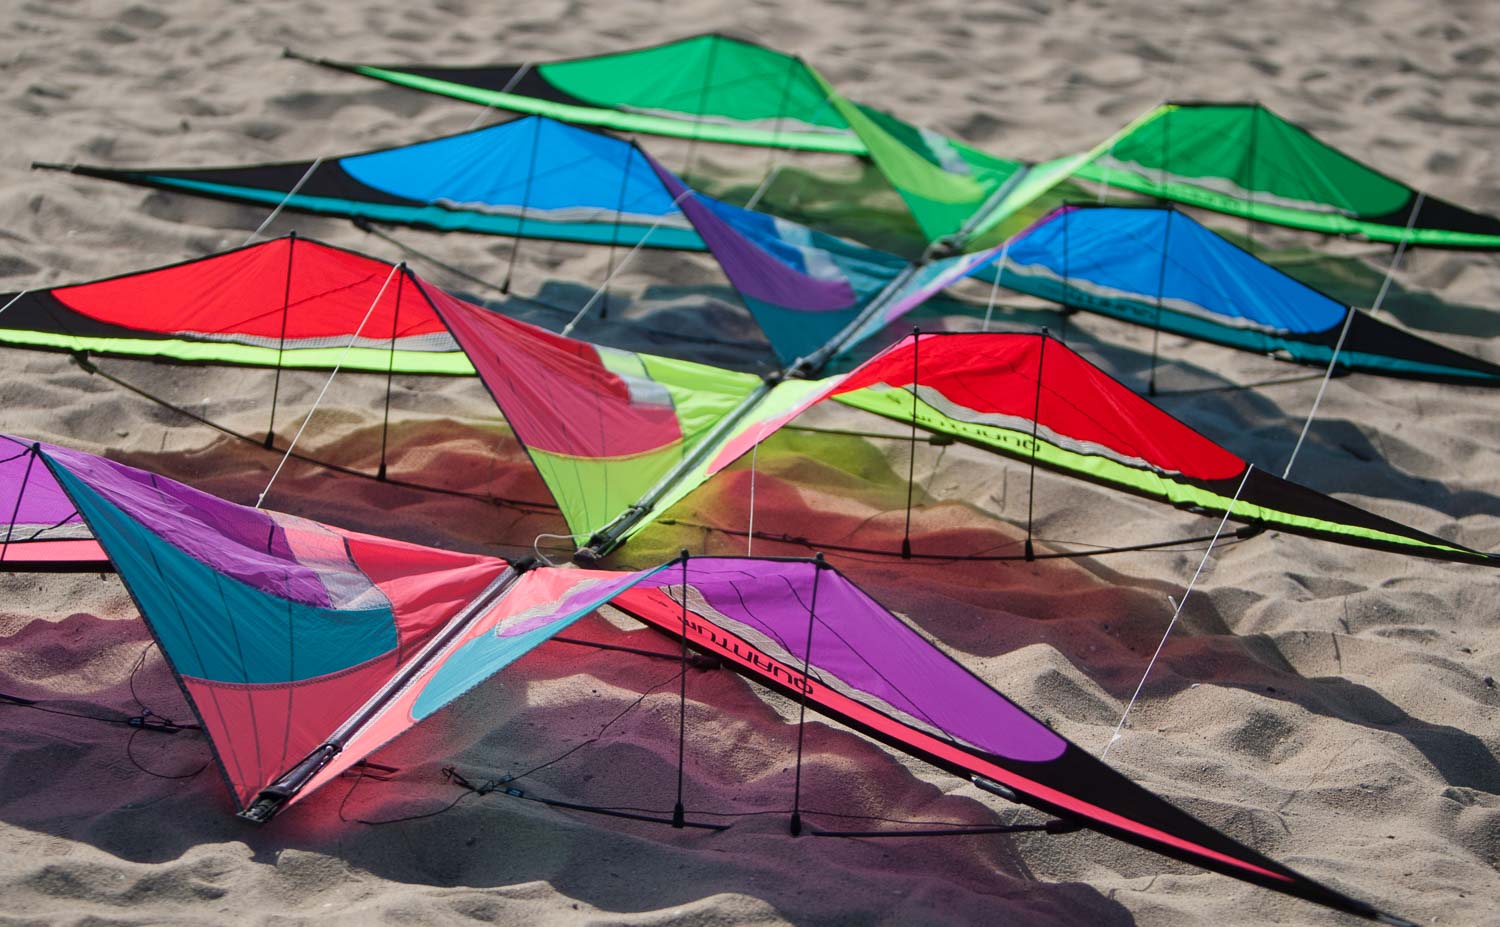 Prism Kite Technology - Quantum Sport Kite 2.0